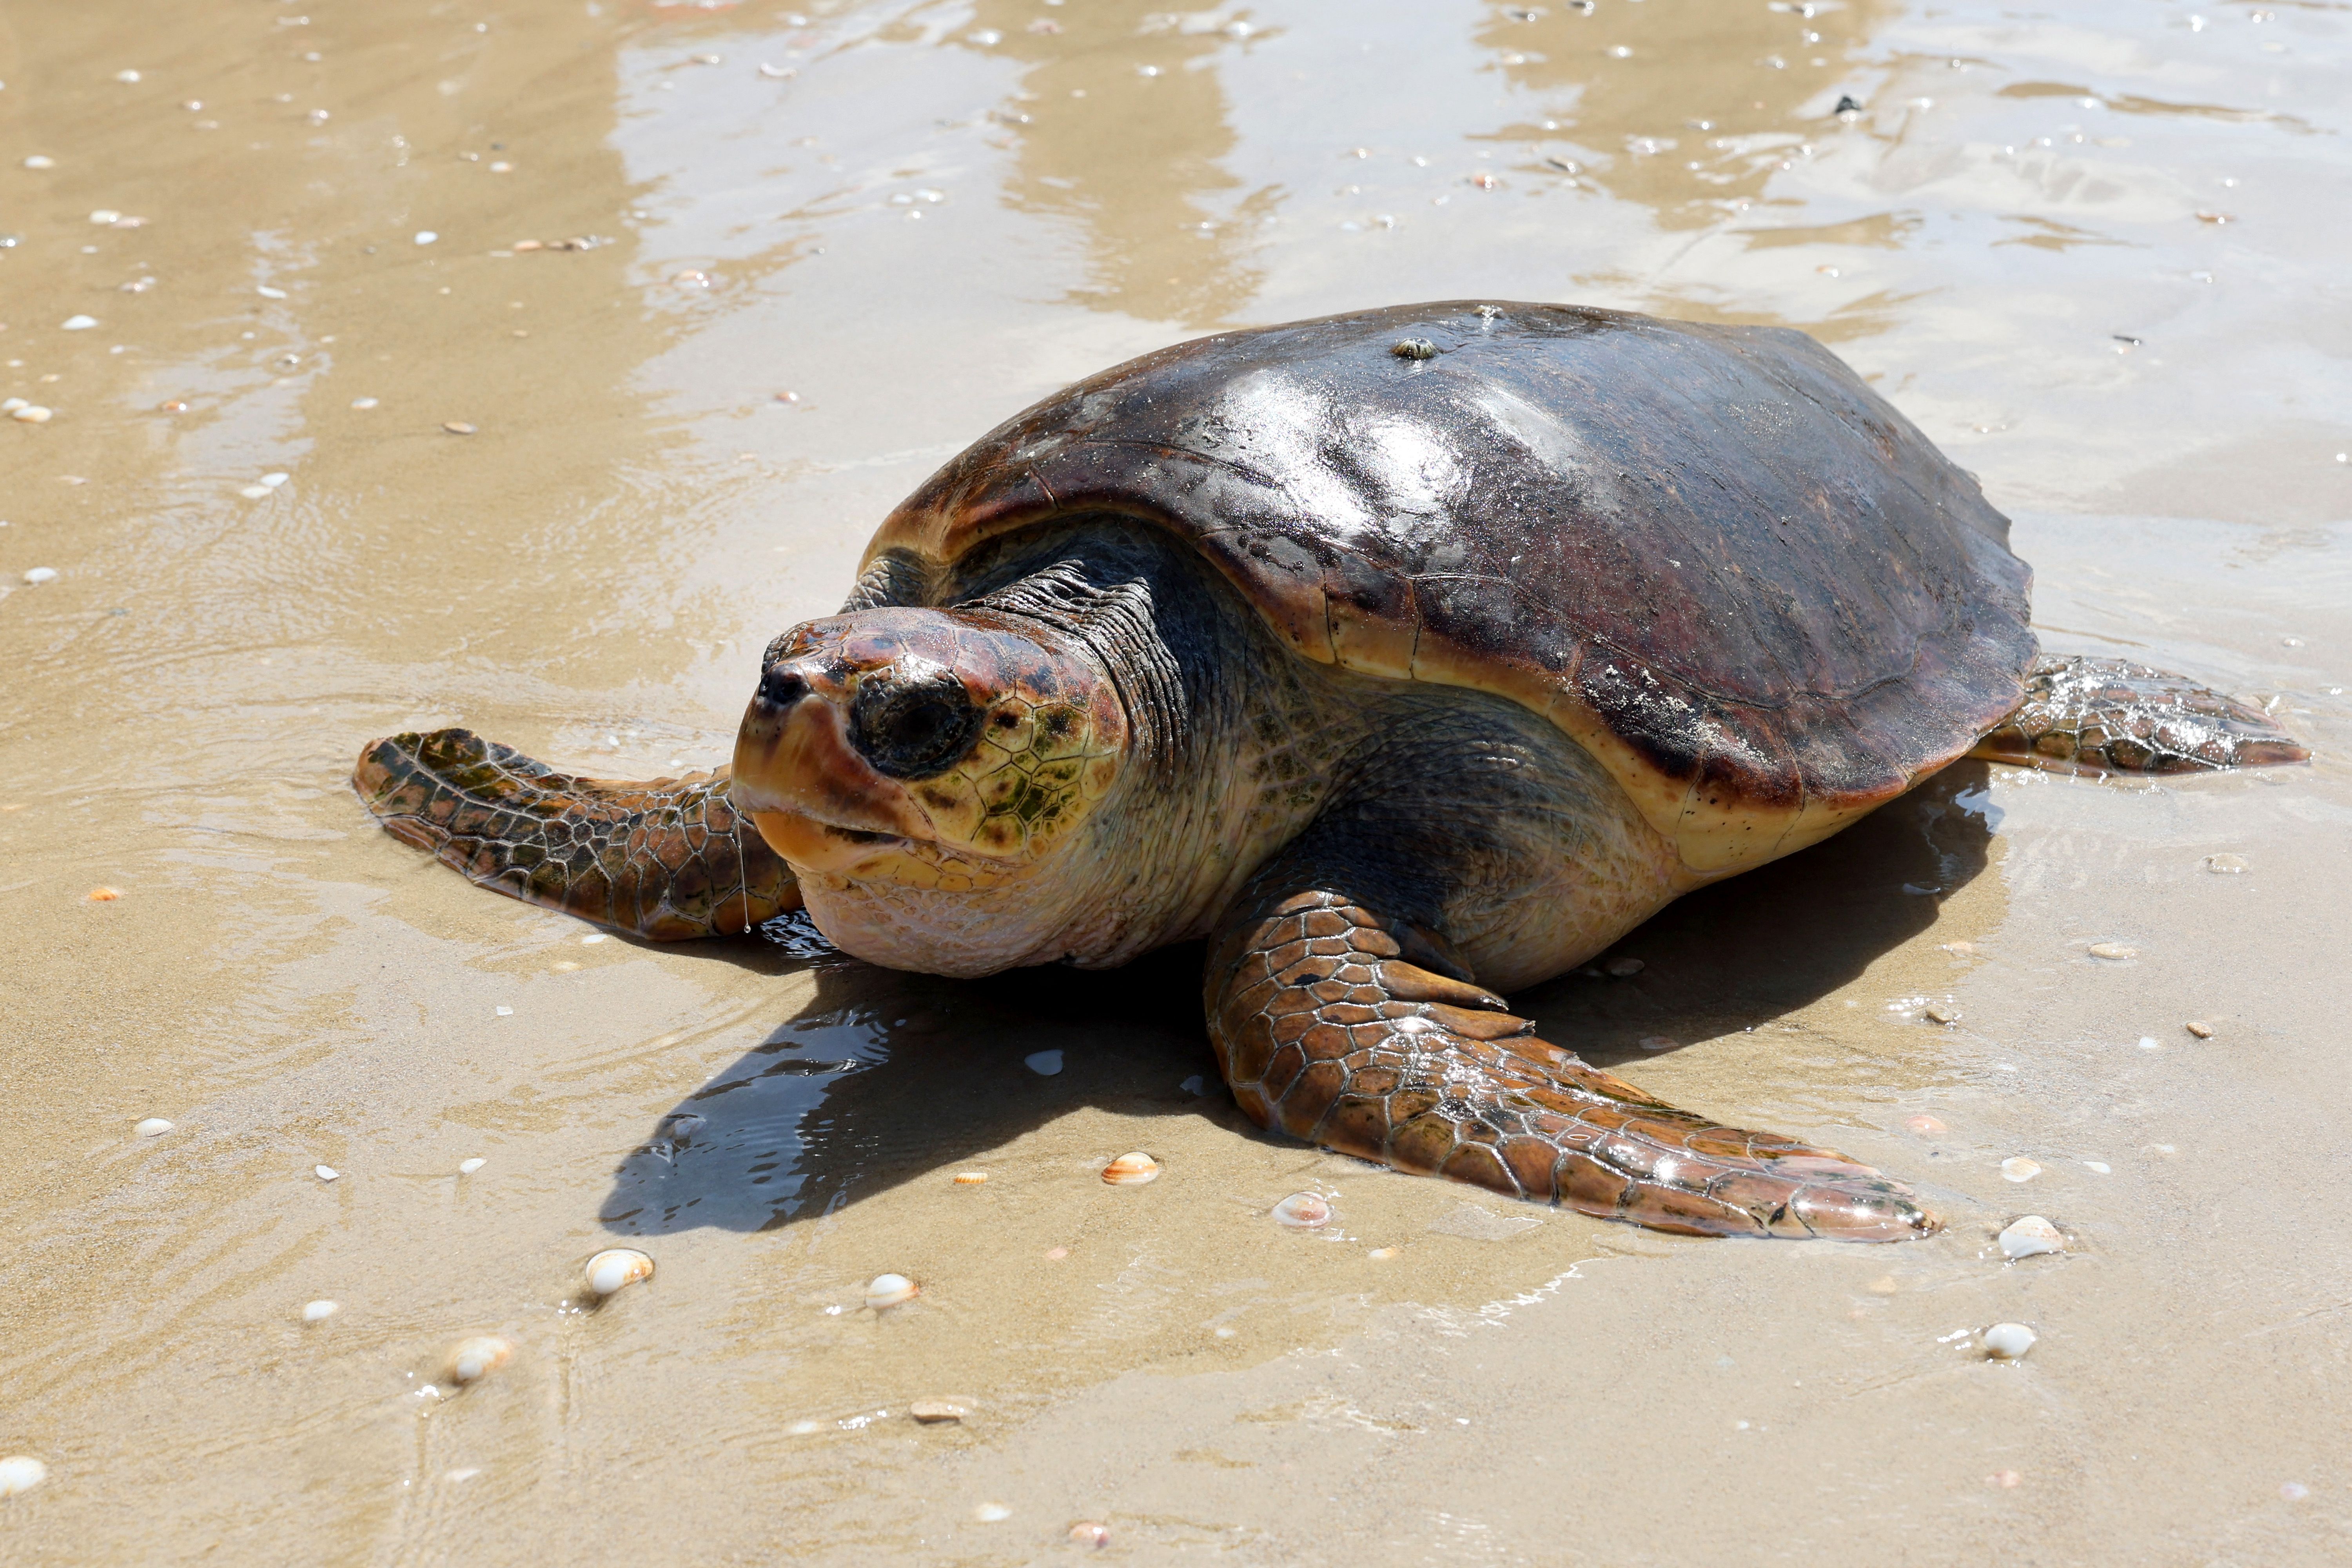 Representative image: A sea turtle finds its way into the Mediterranean